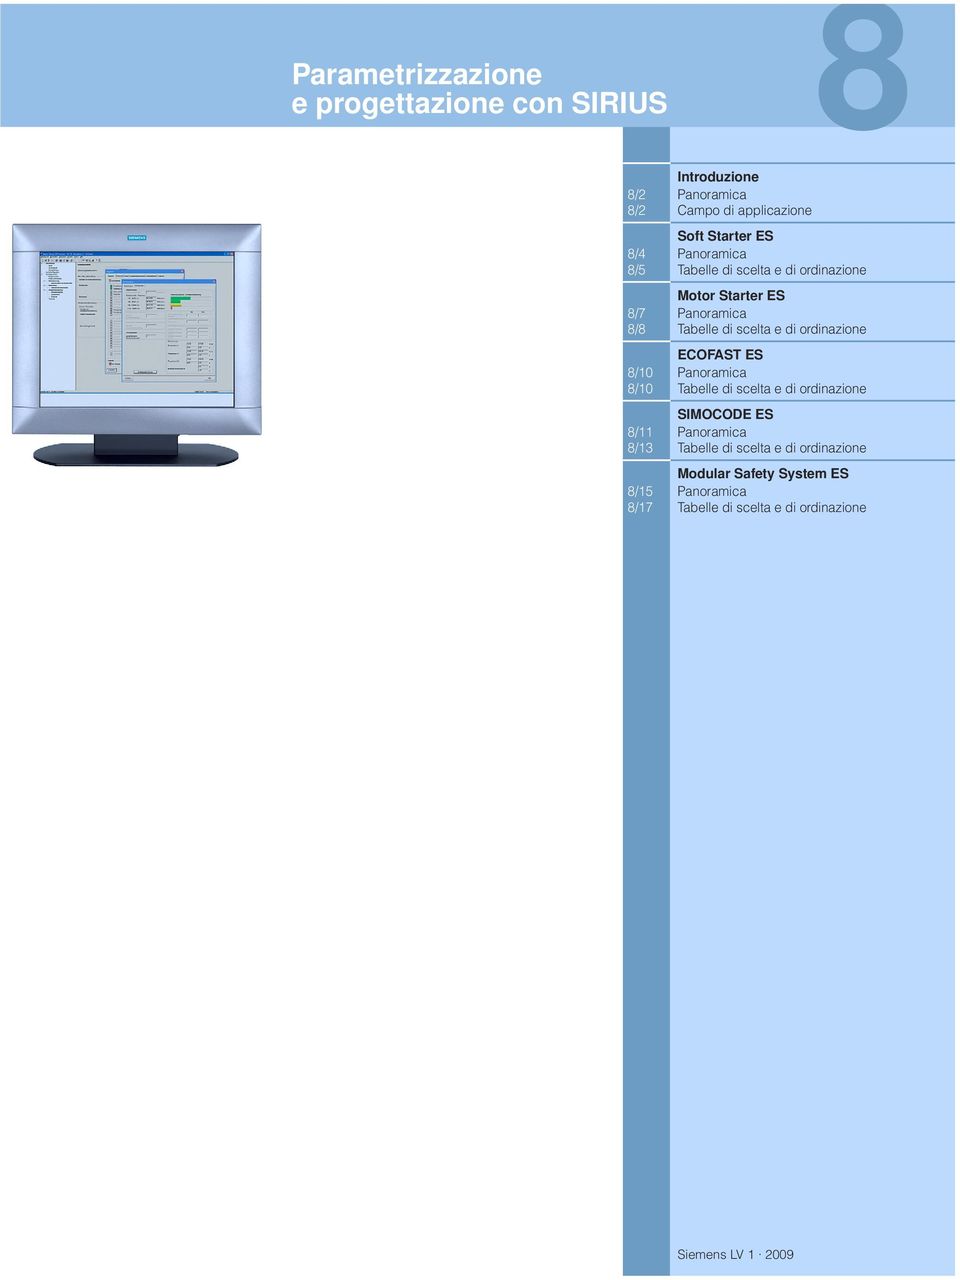 ordinazione ECOFAST ES /10 Panoramica /10 Tabelle di scelta e di ordinazione SIMOCODE ES /11 Panoramica /13